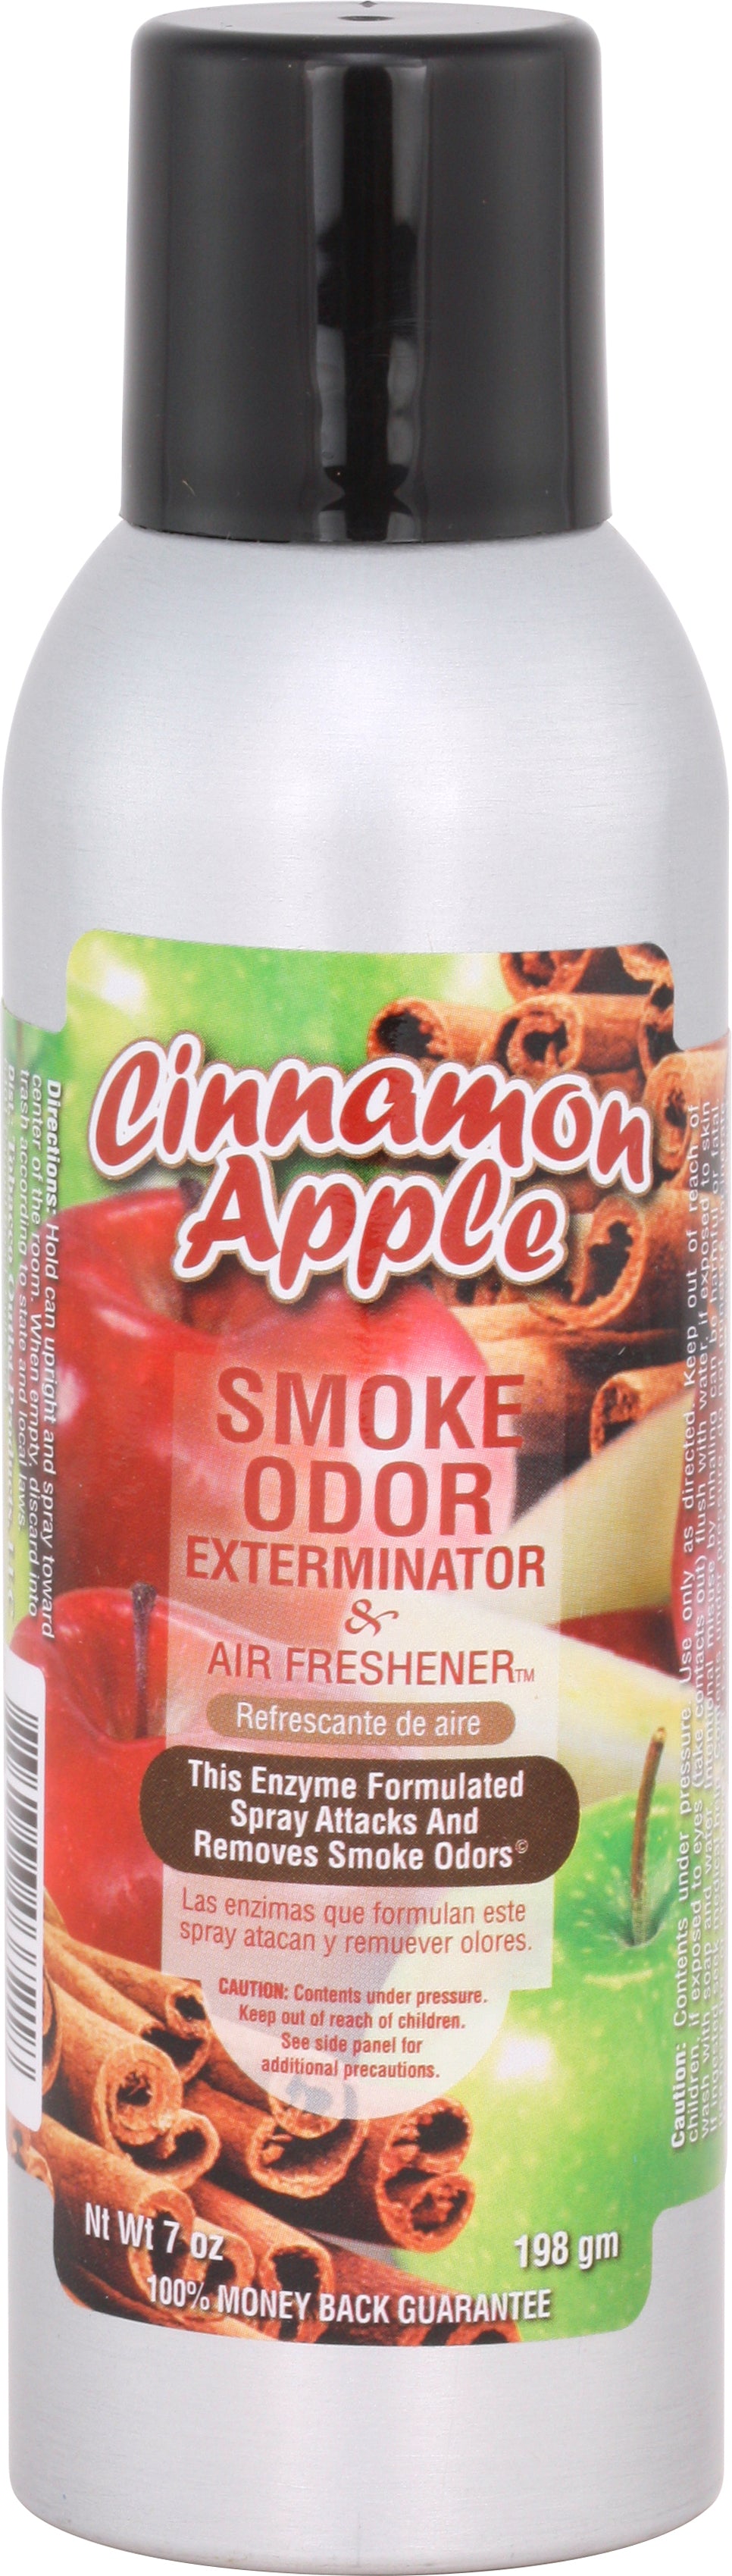 Smoke Odor 7 Oz. Spray: Cinnamon Apple